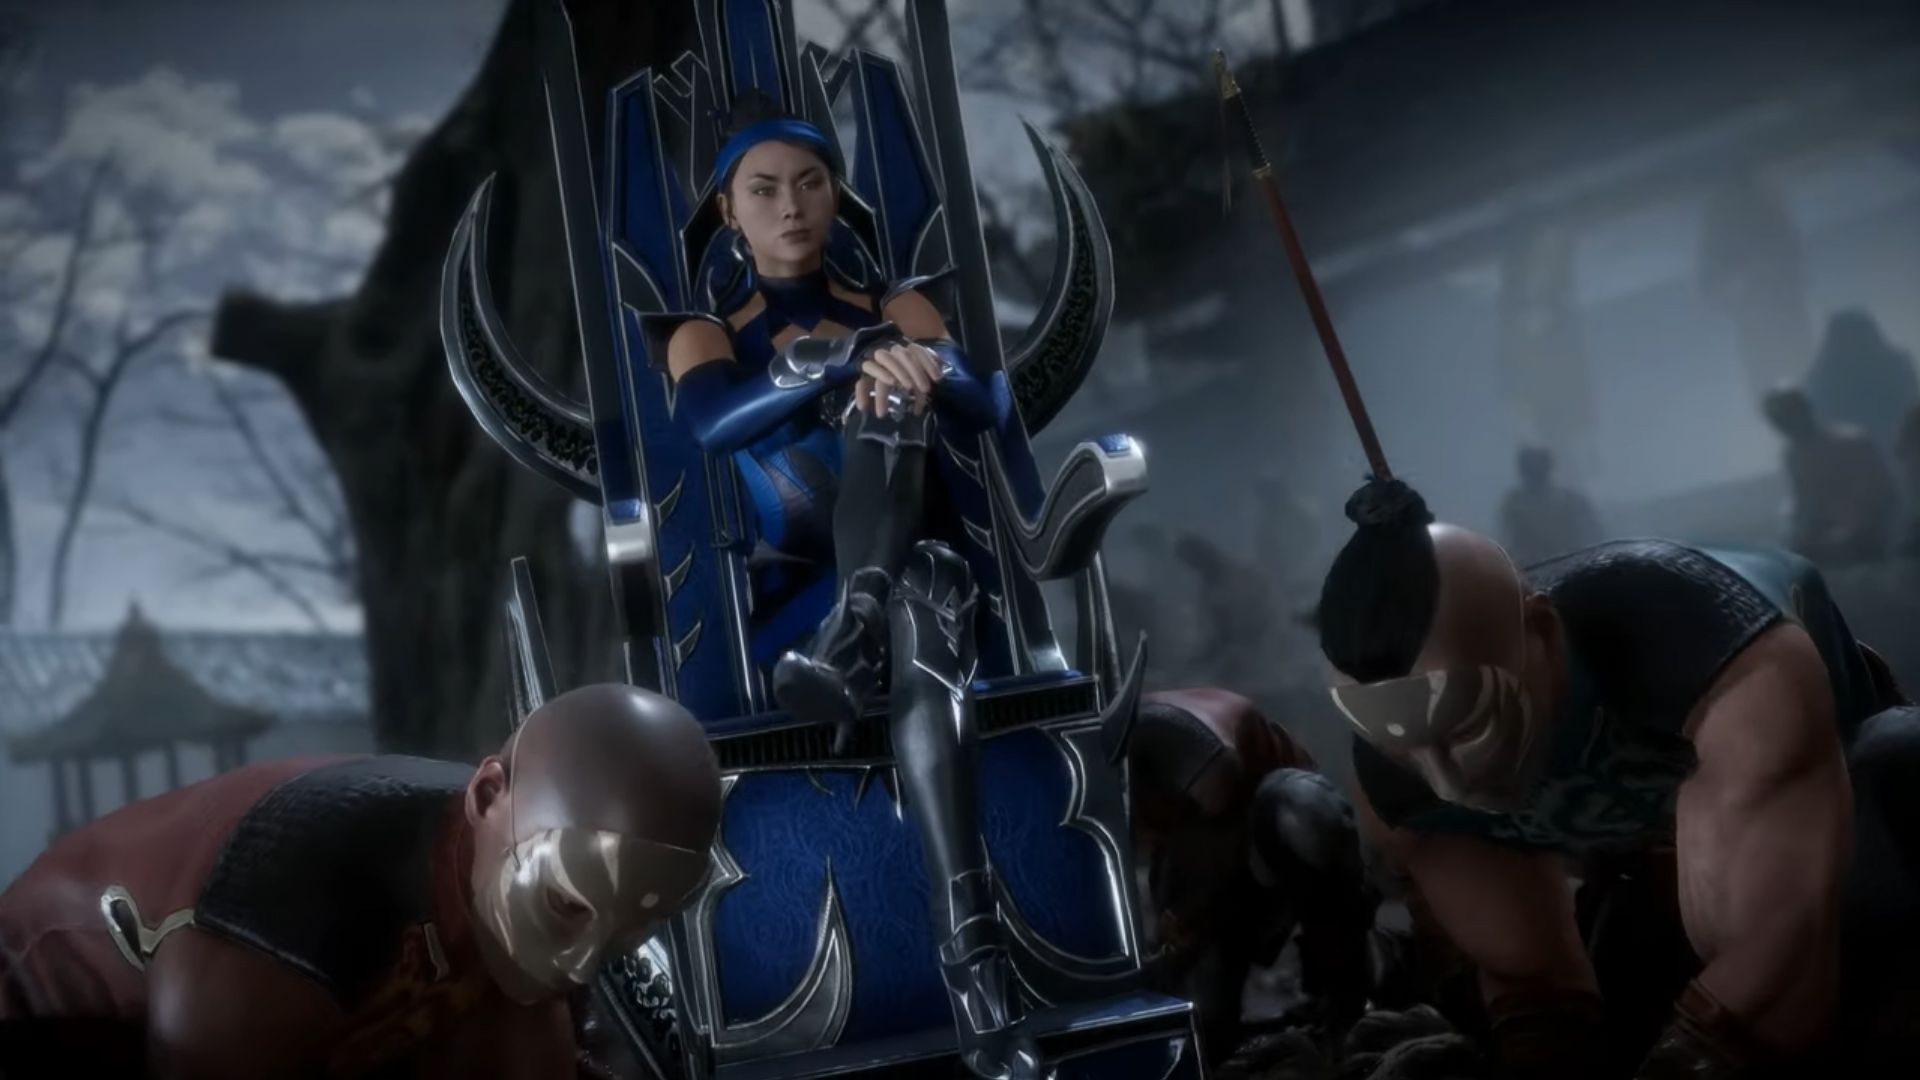 Mortal Kombat 11 Mod Adds Sektor, Cyrax, and Kronika as Playable